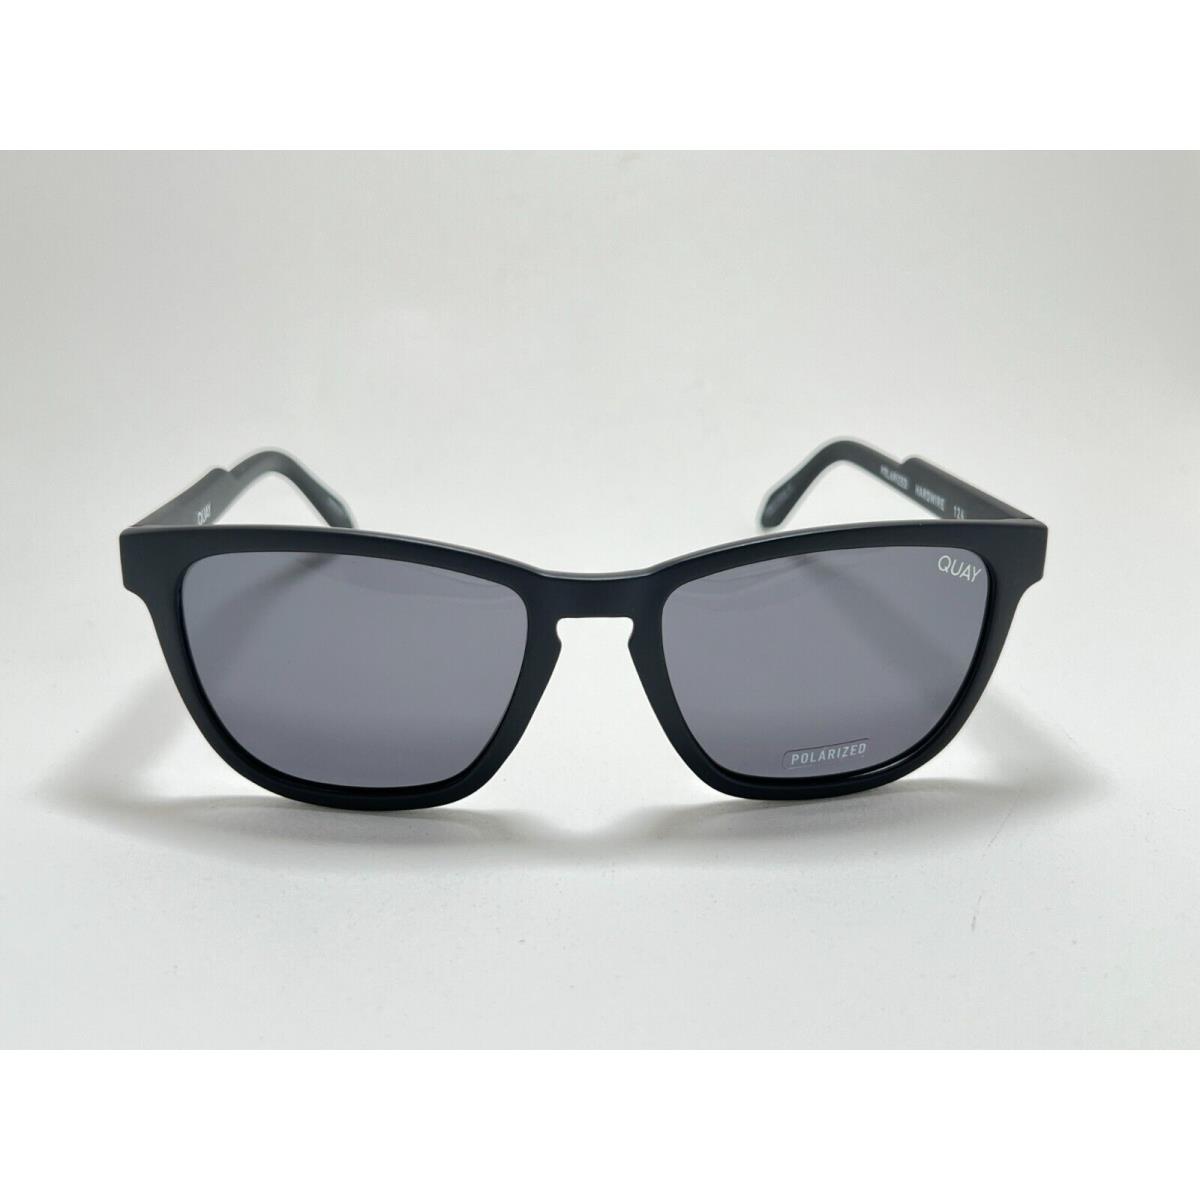 Quay Hardwire Square Sunglasses Black/smoke Polarized